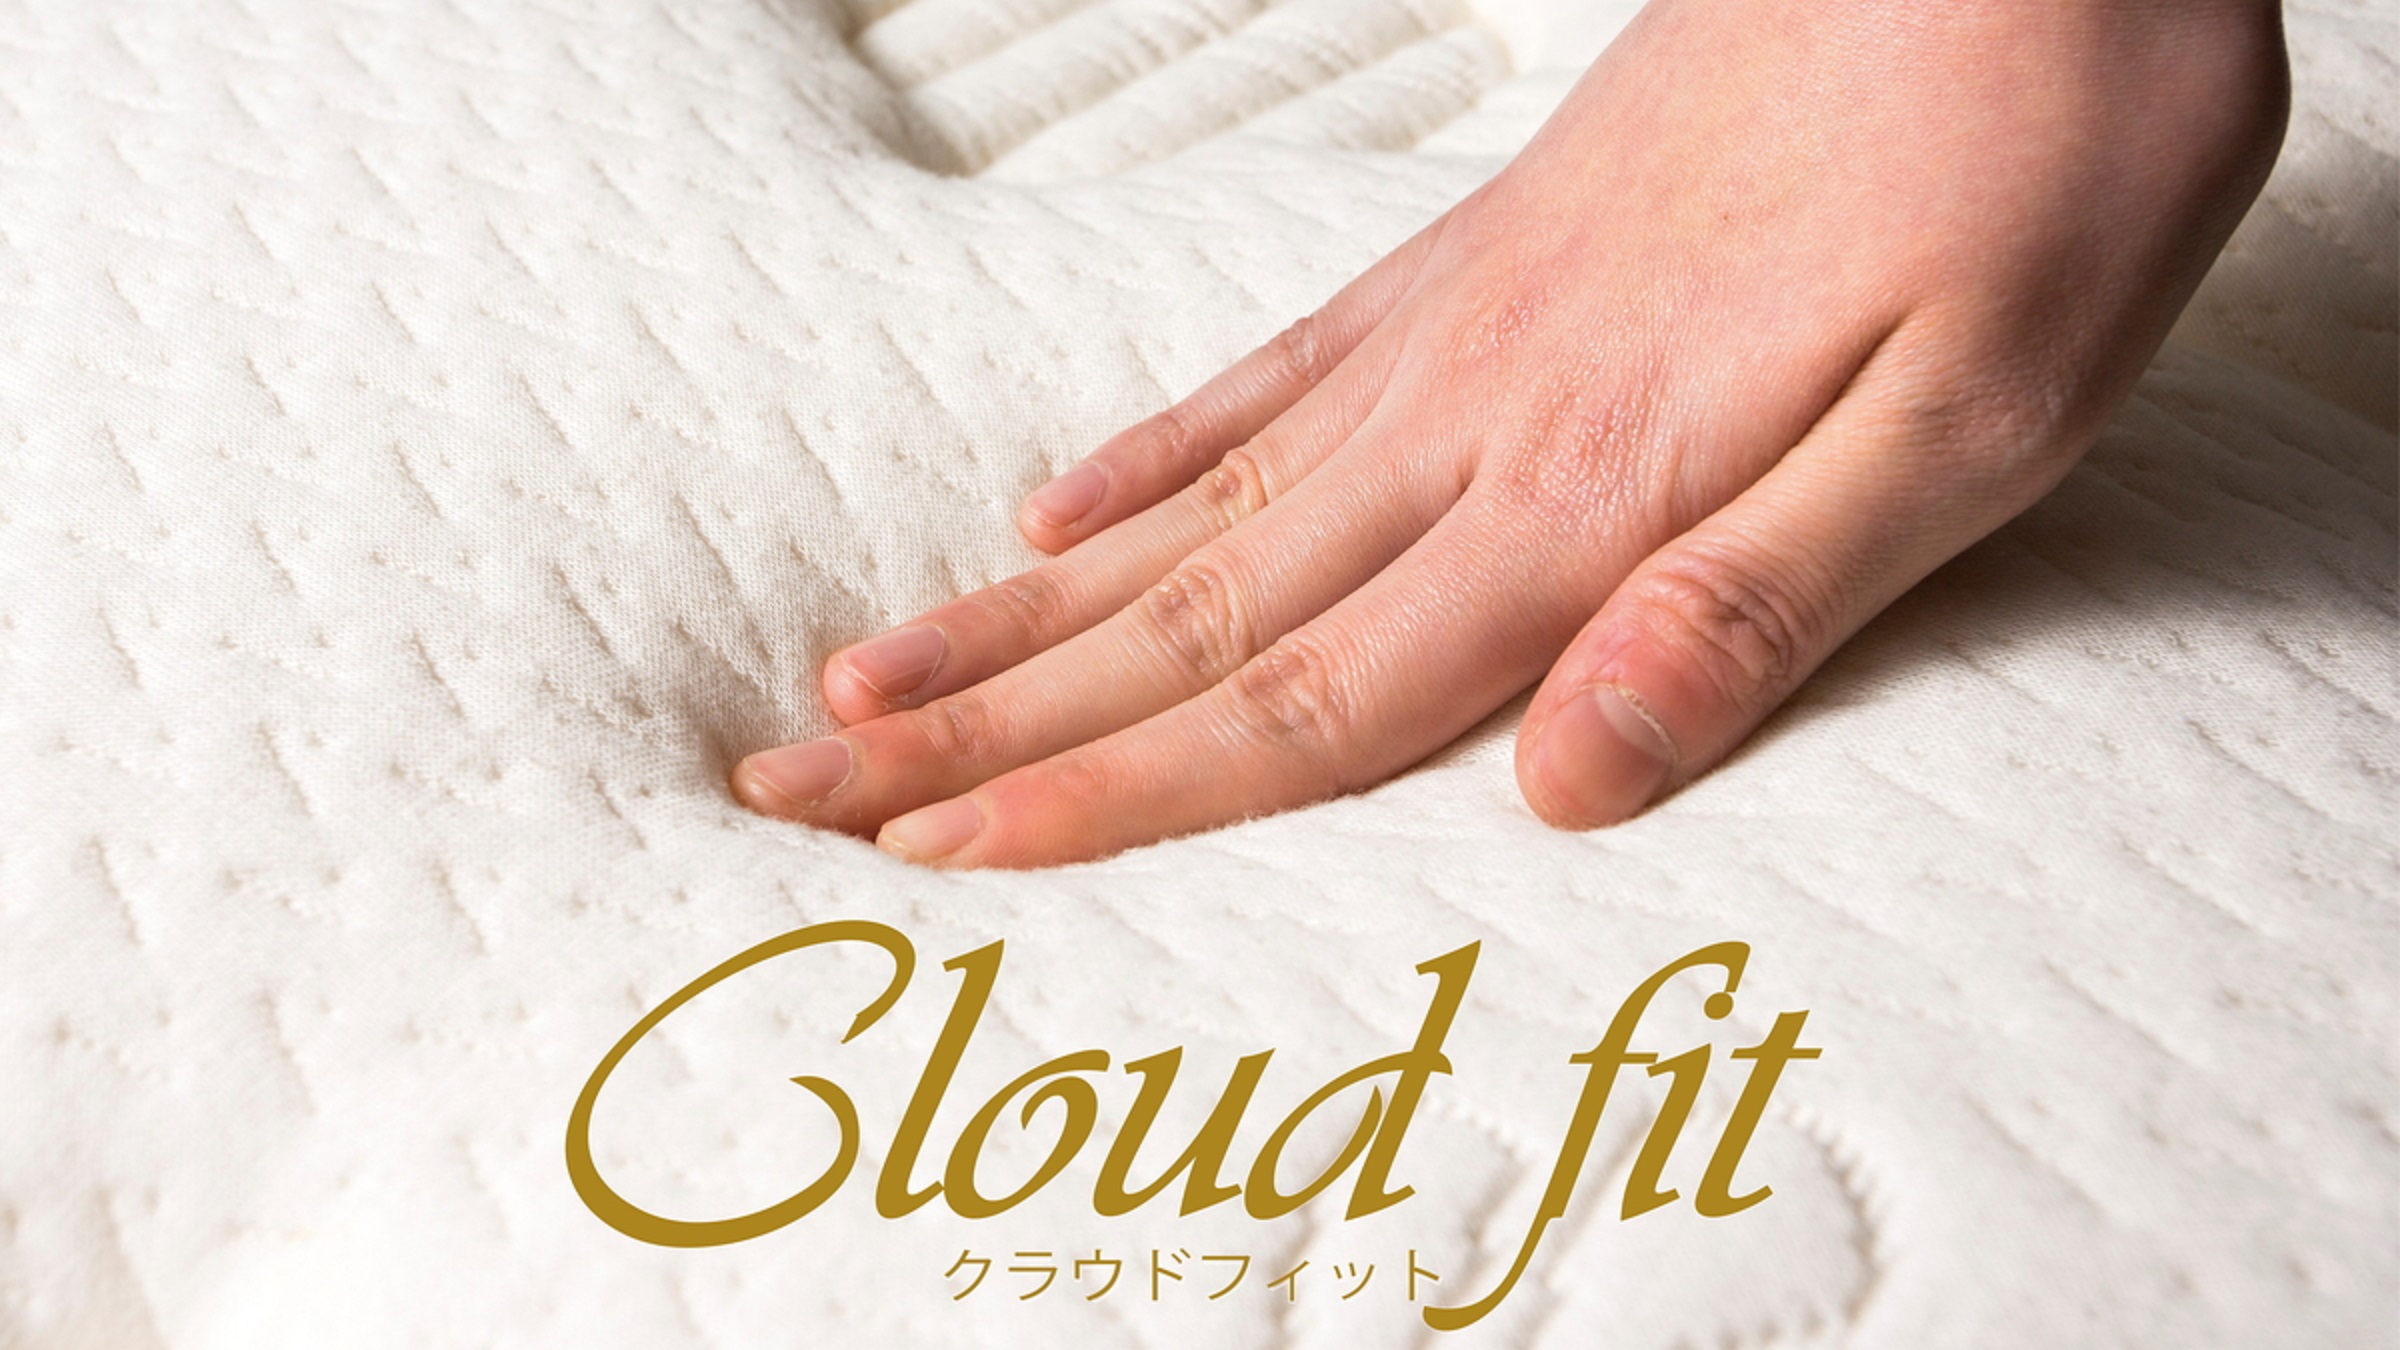 ■Cloud fit (オリジナルベッド）